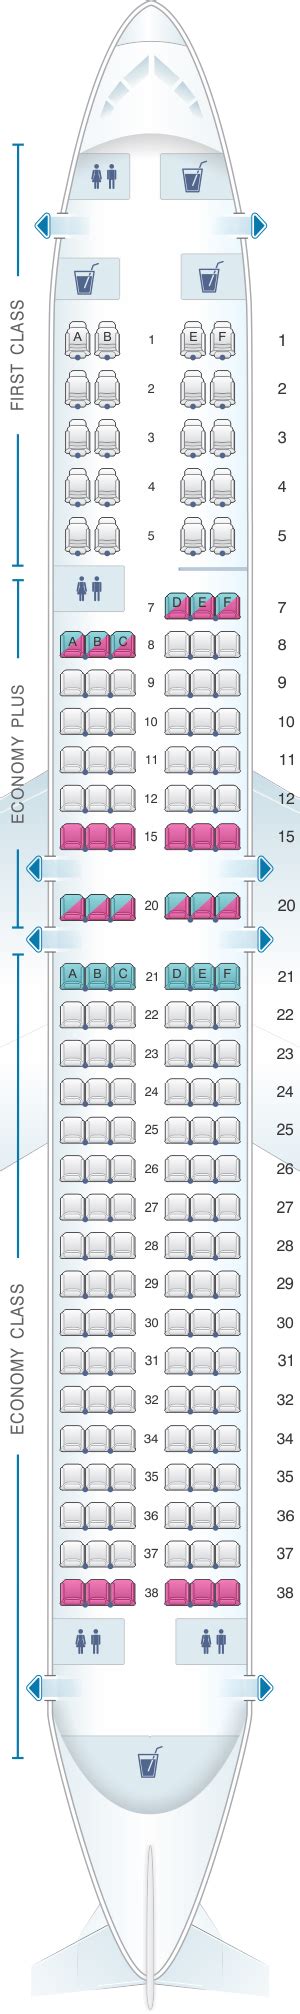 United Boeing 737 900 Seat Map Tutorial Pics